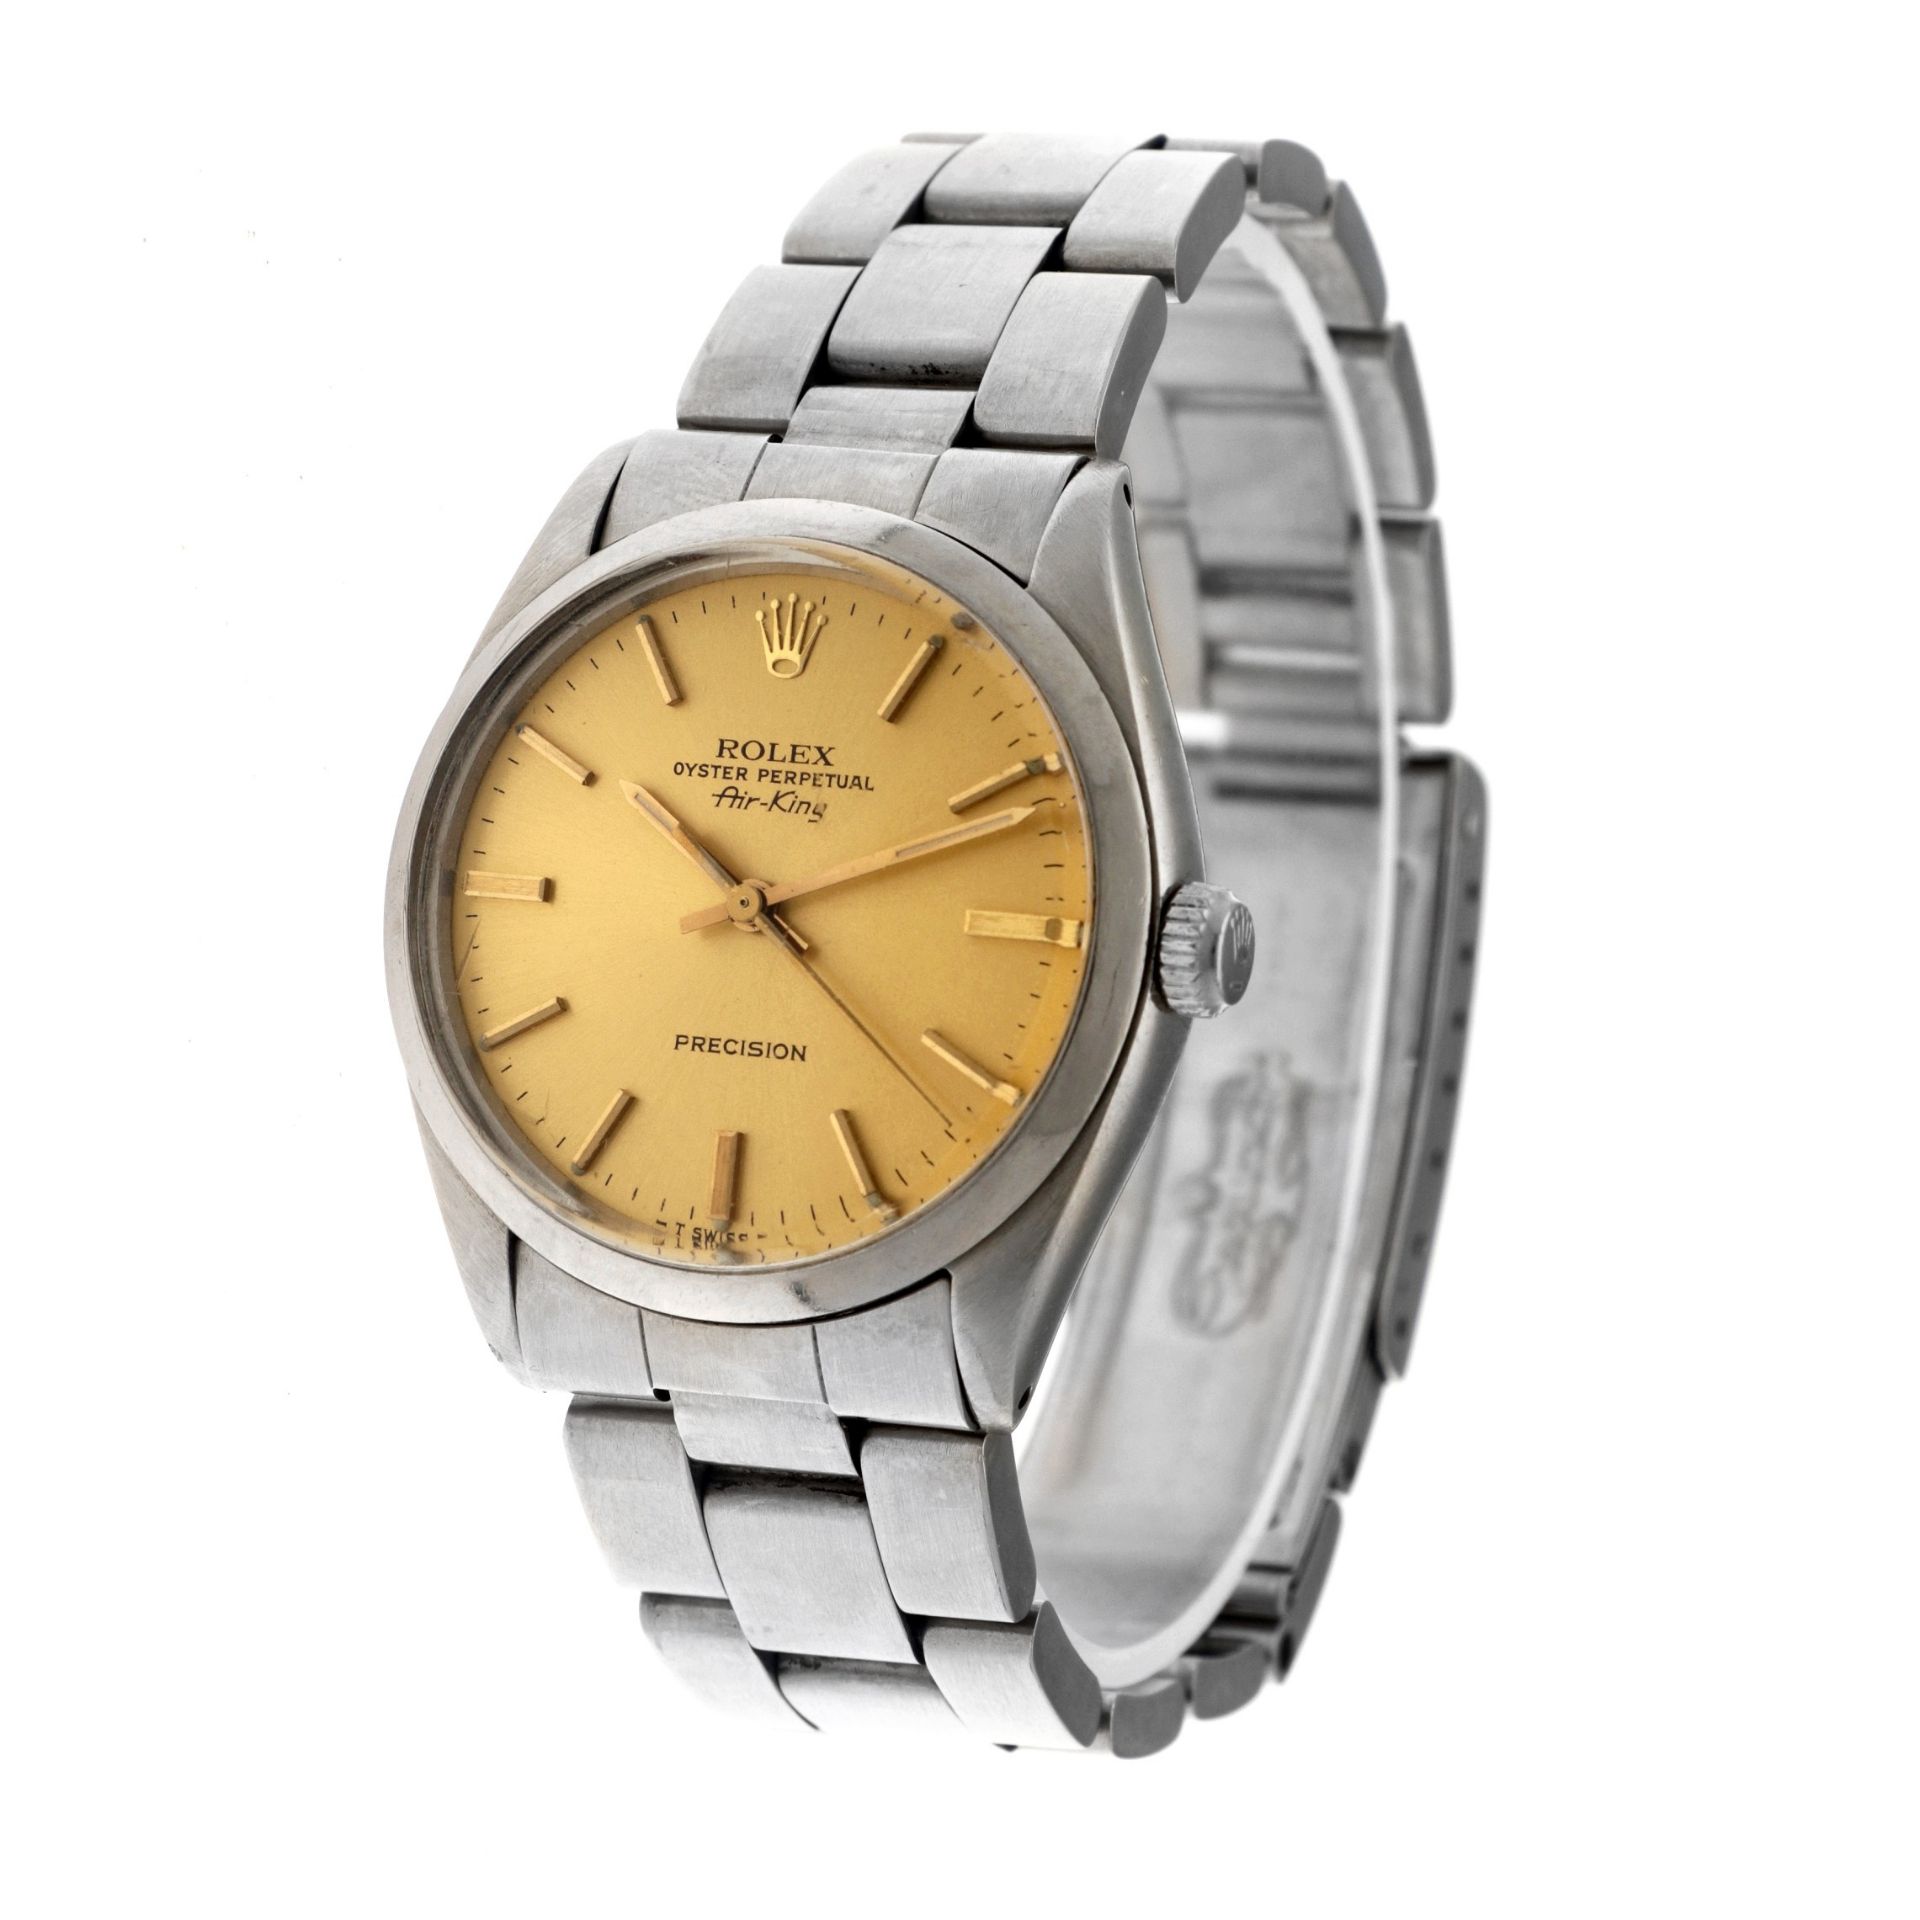 No Reserve - Rolex Air-King 5500 - Men's watch - approx. 1988. - Bild 2 aus 5